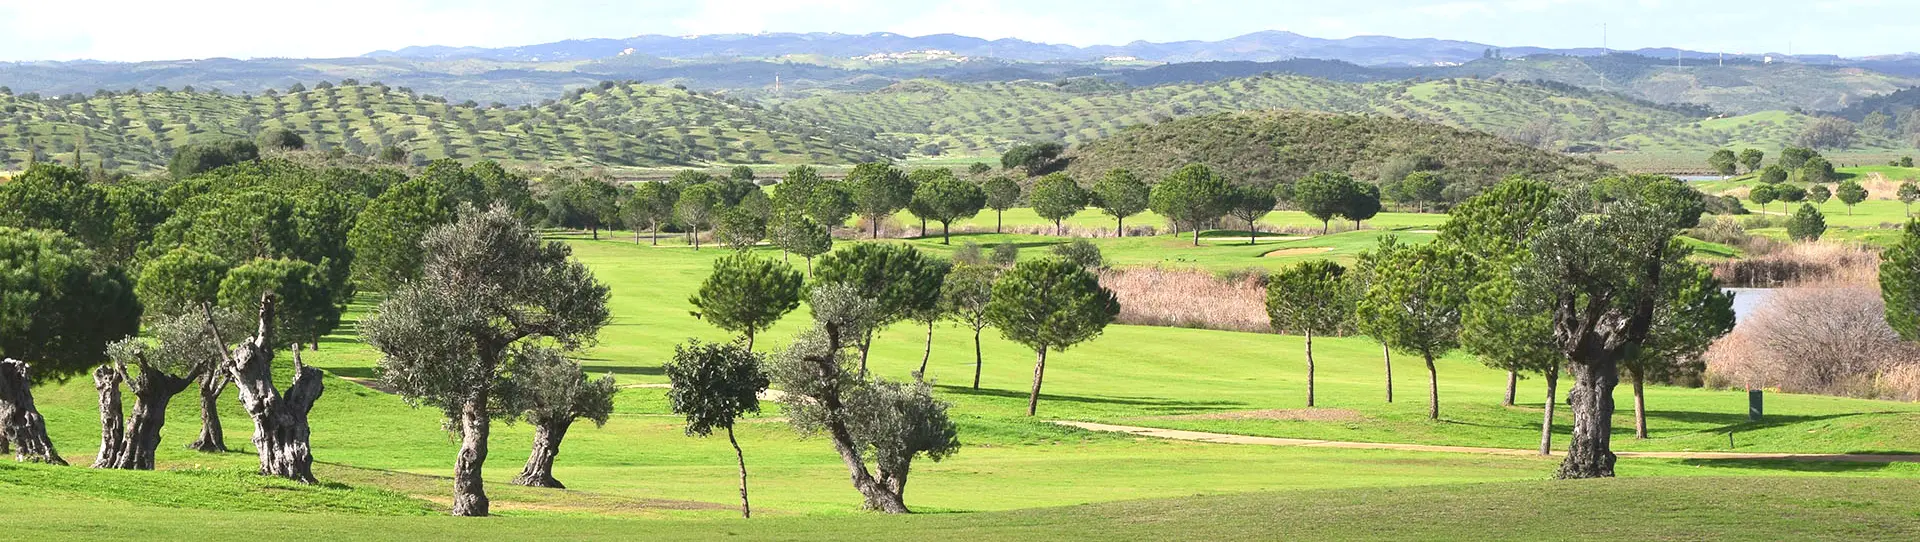 Spain golf courses - Isla Canela Links  - Photo 1